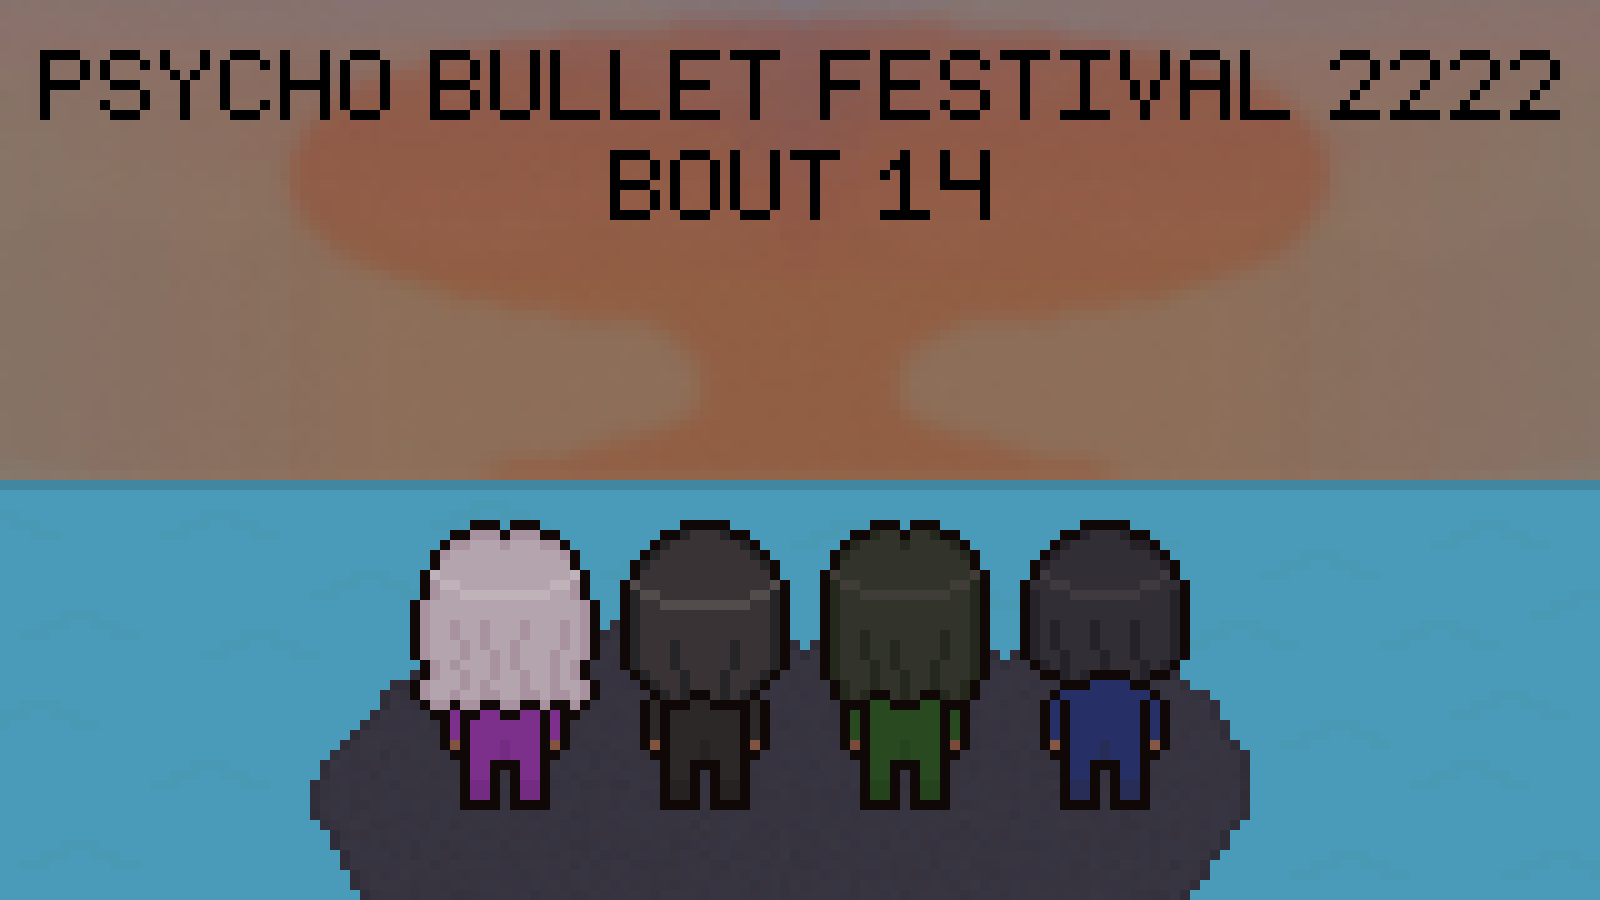 psycho-bullet-festival-2222-ch-14.png